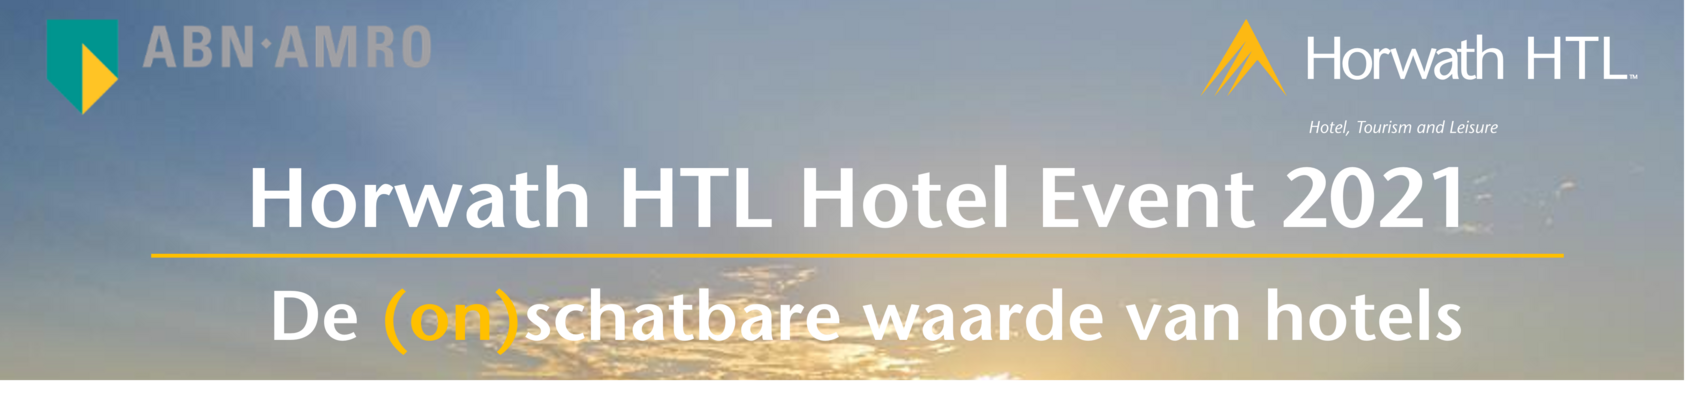 Horwath HTL Hotel Event 2021